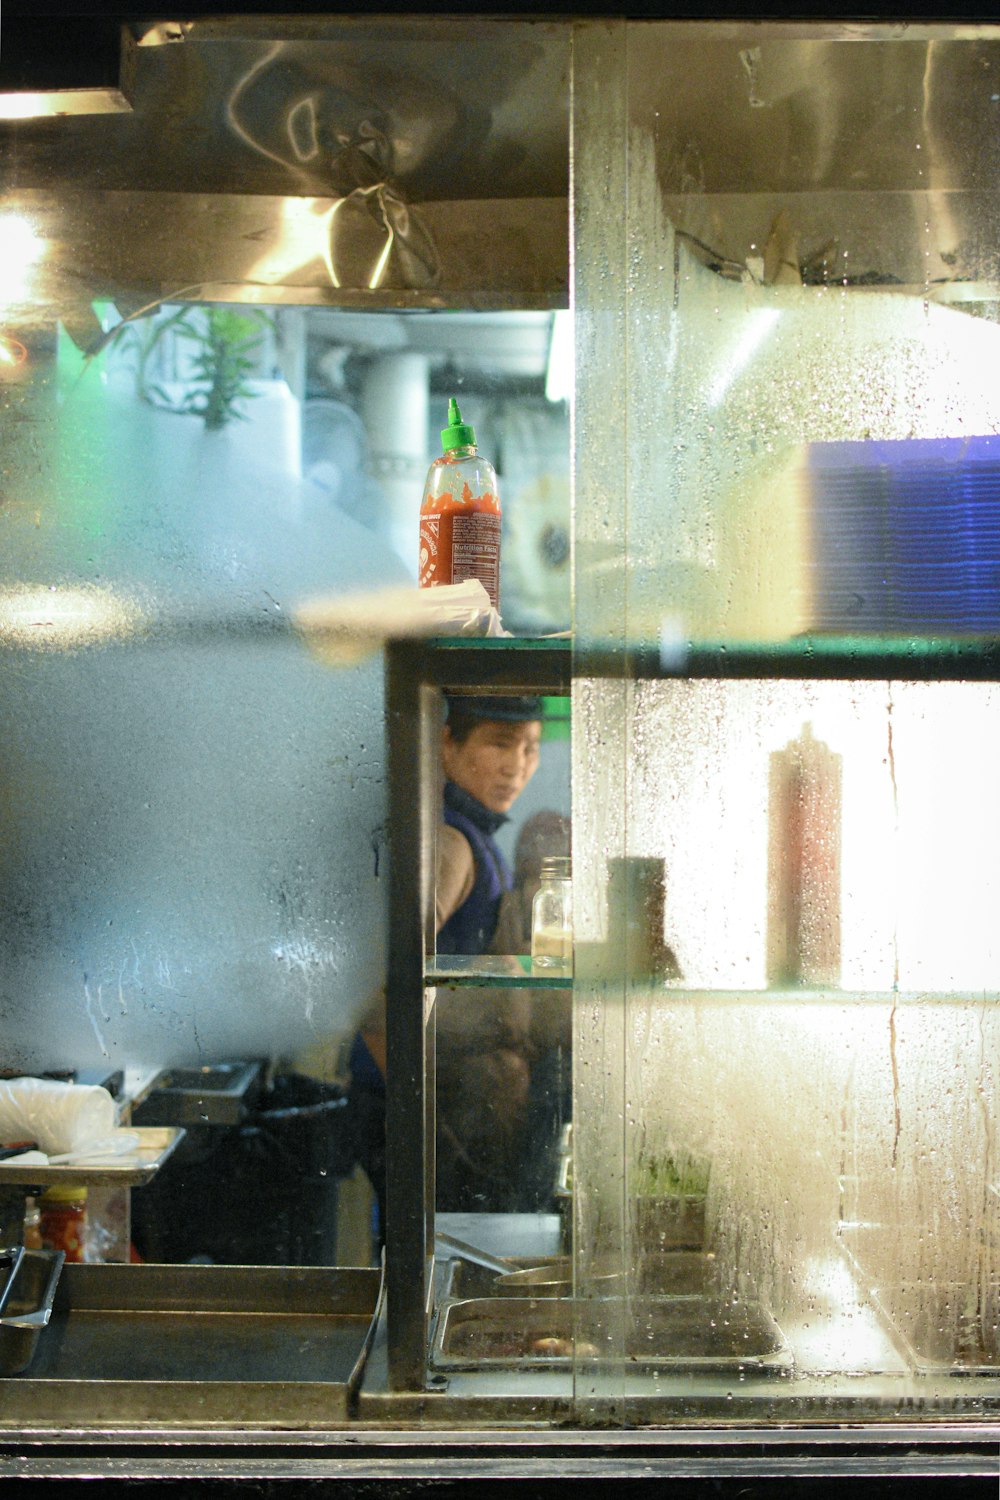 man inside kitchen view from glass moist window